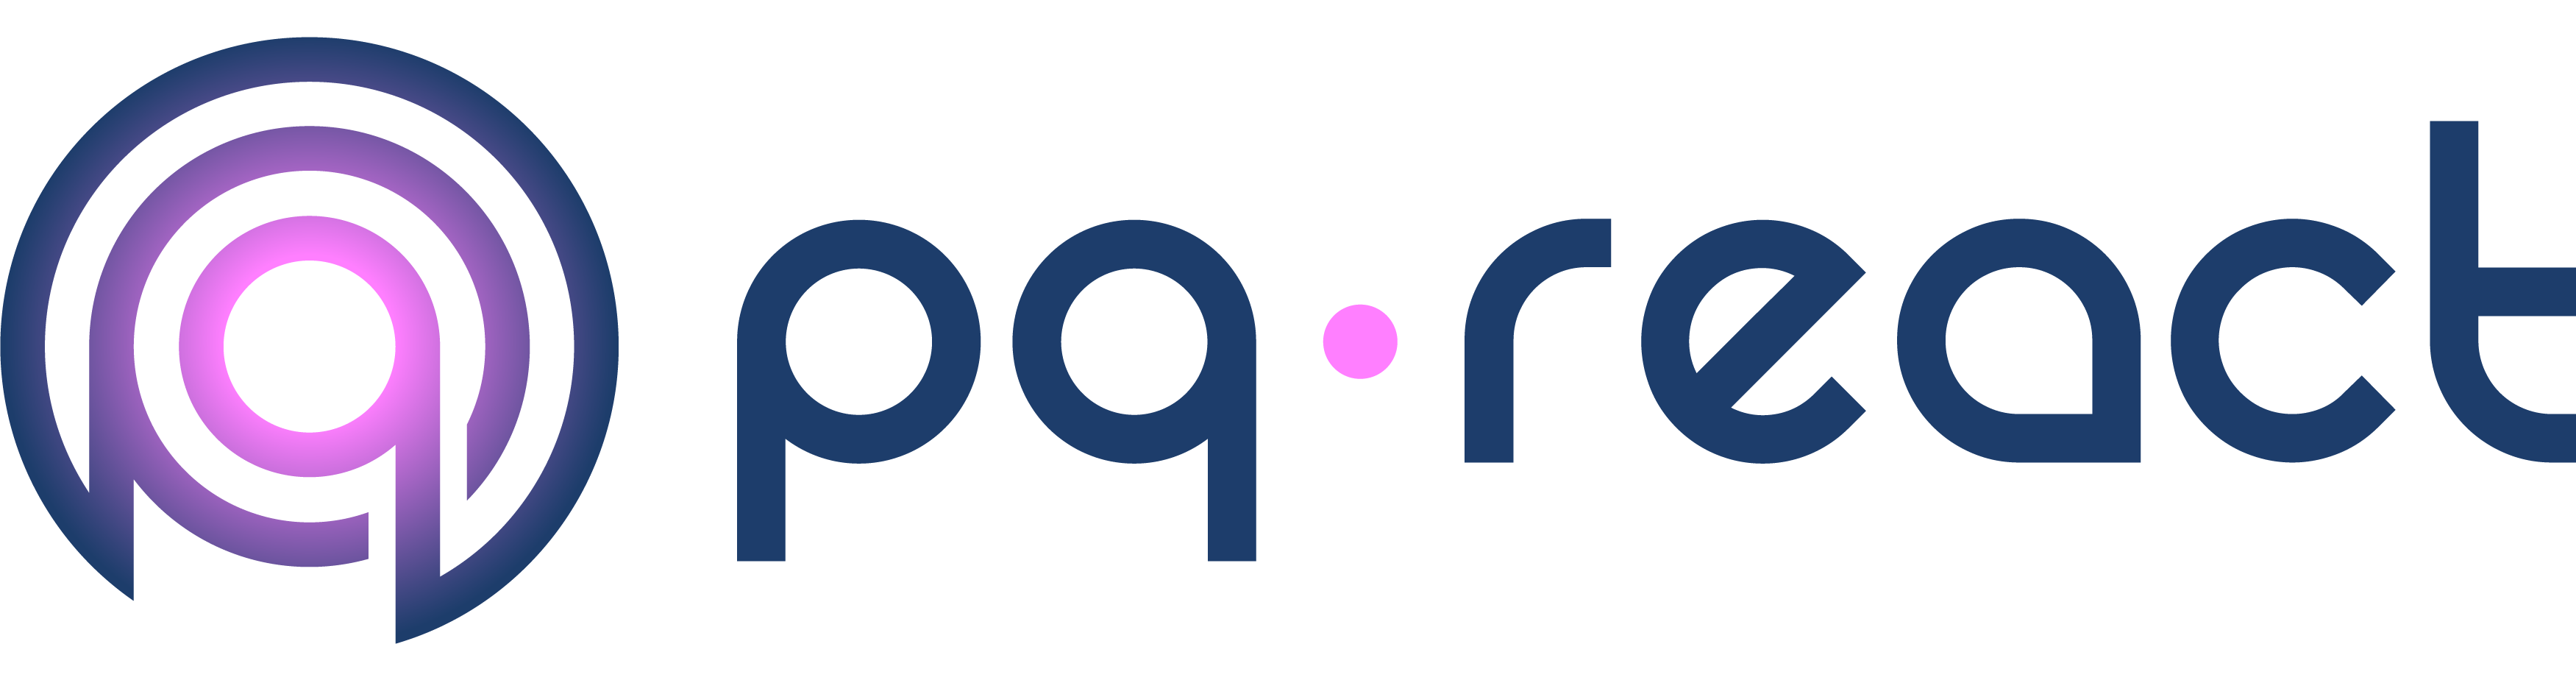 PQ-REACT_Logo_Horizontal-dark